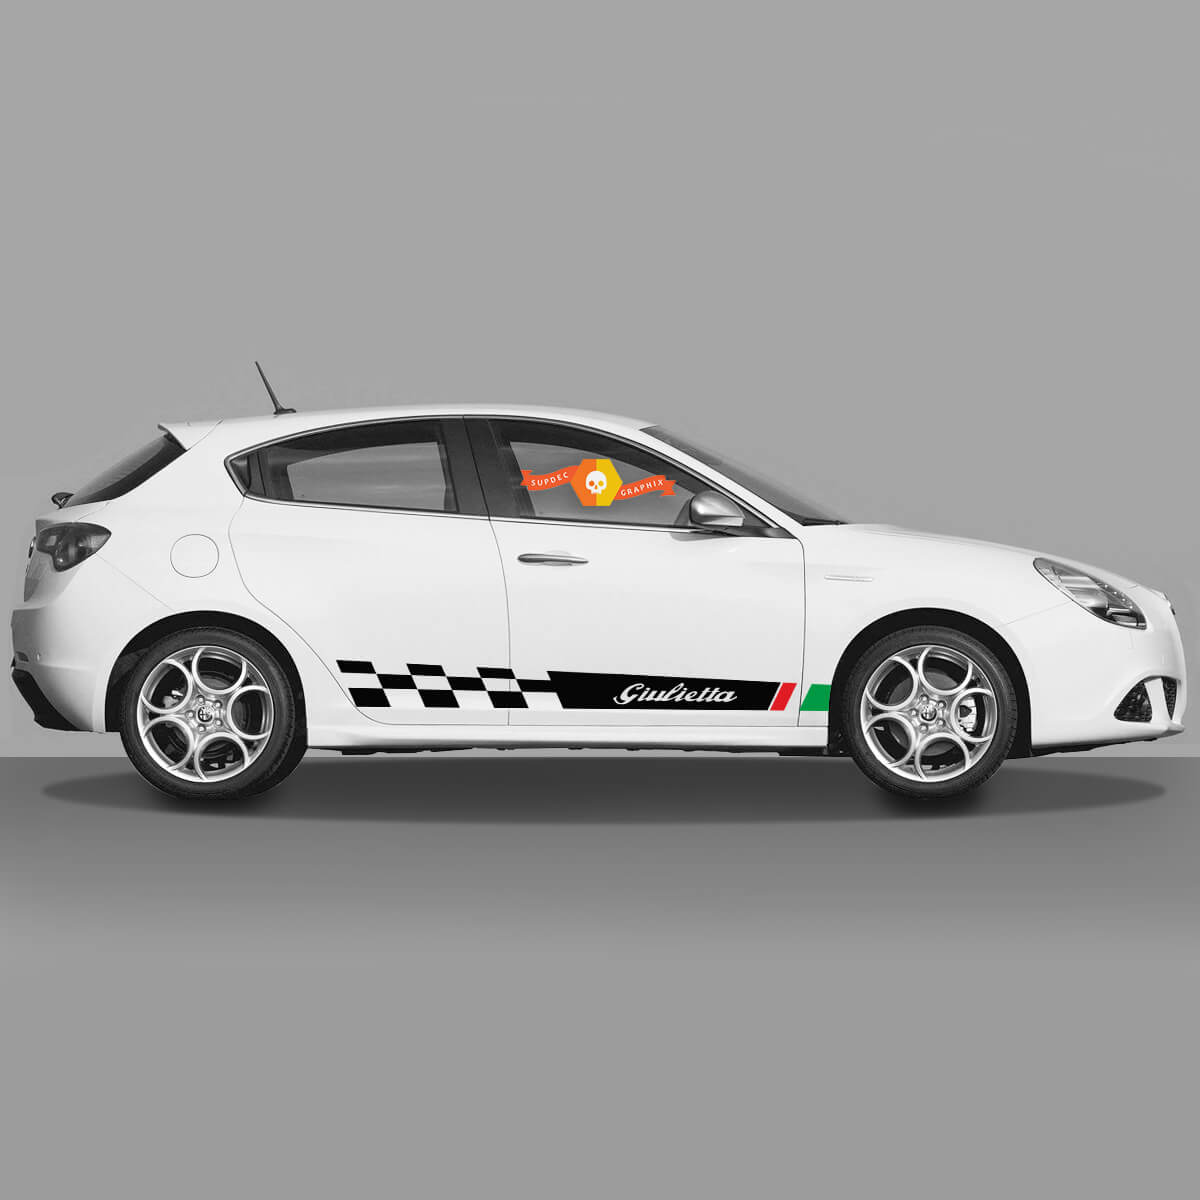 2x Alfa Romeo Giulietta Decalcomanie Vinyl Graphics Rocker Panel Italy Flag Inizio 2022